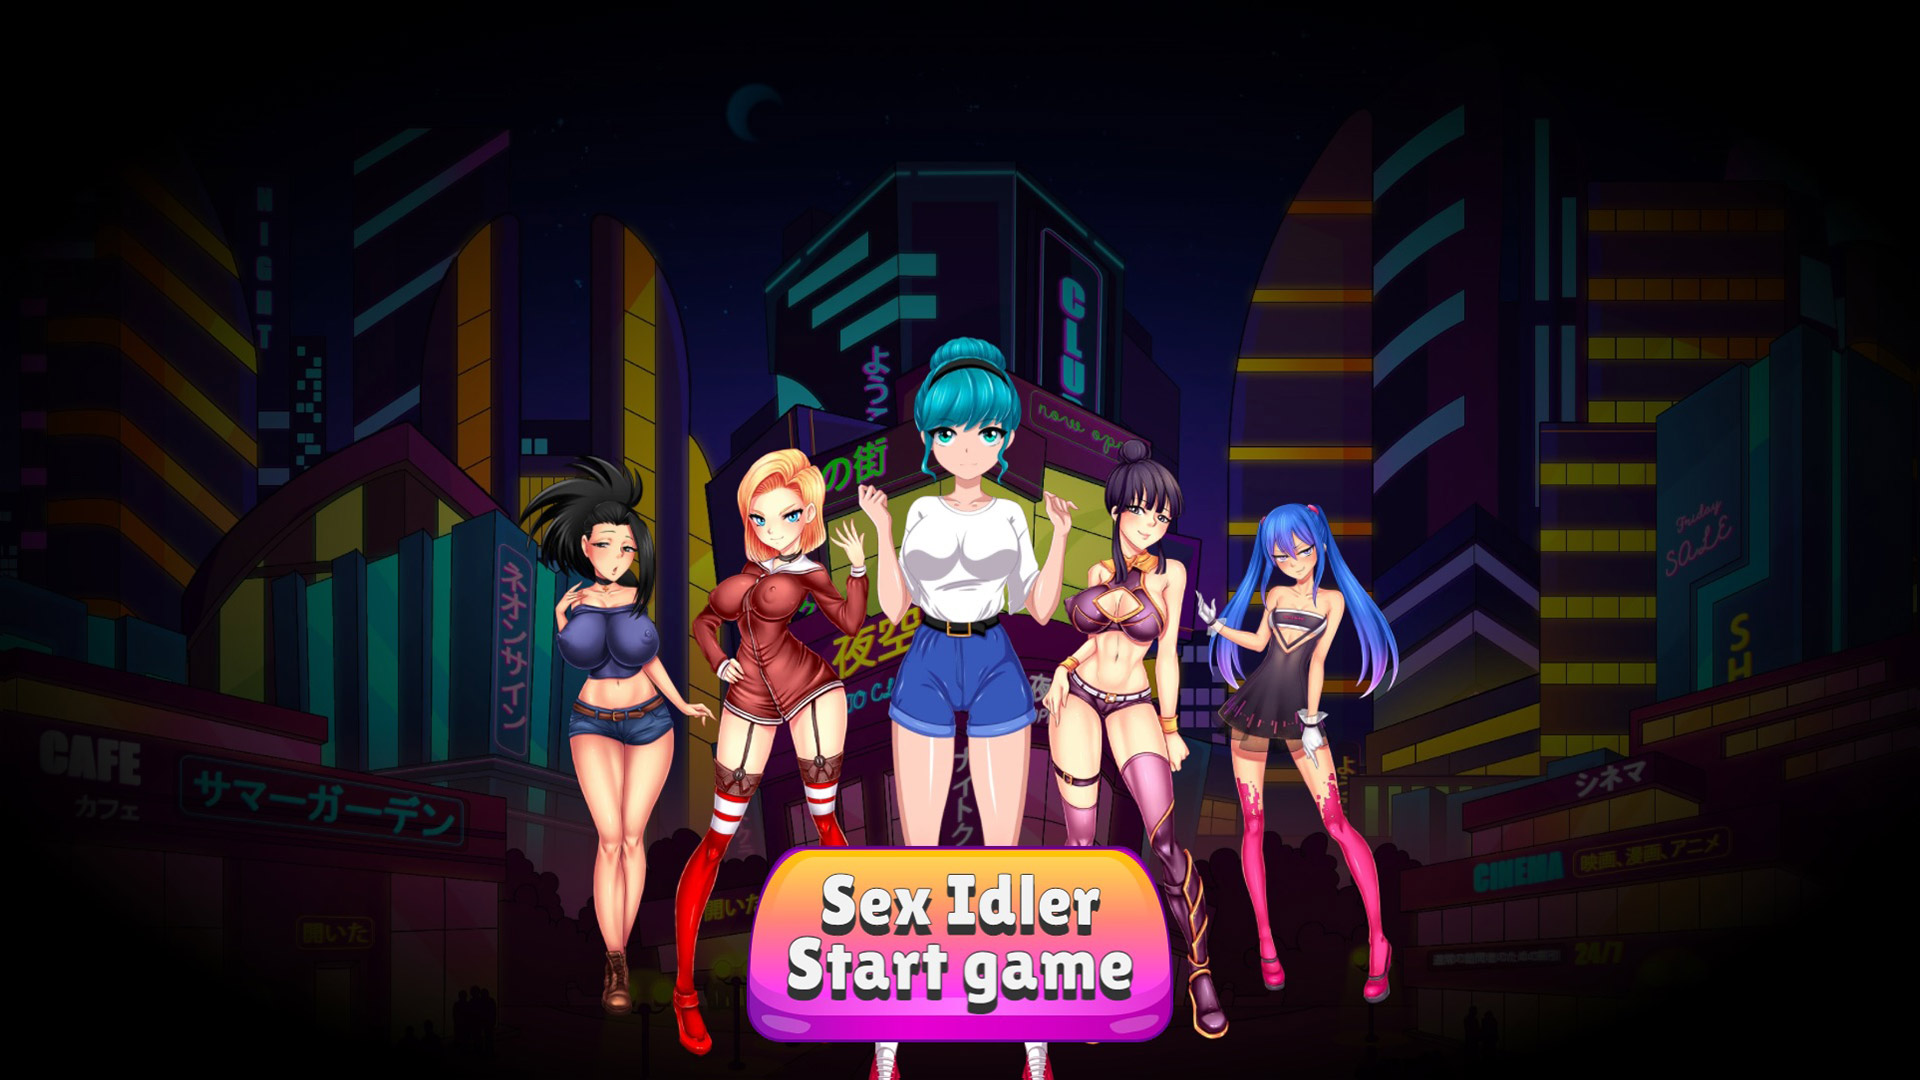 Play action-adventure Game - Sex Idler on Nutaku. action-adventure Game - S...